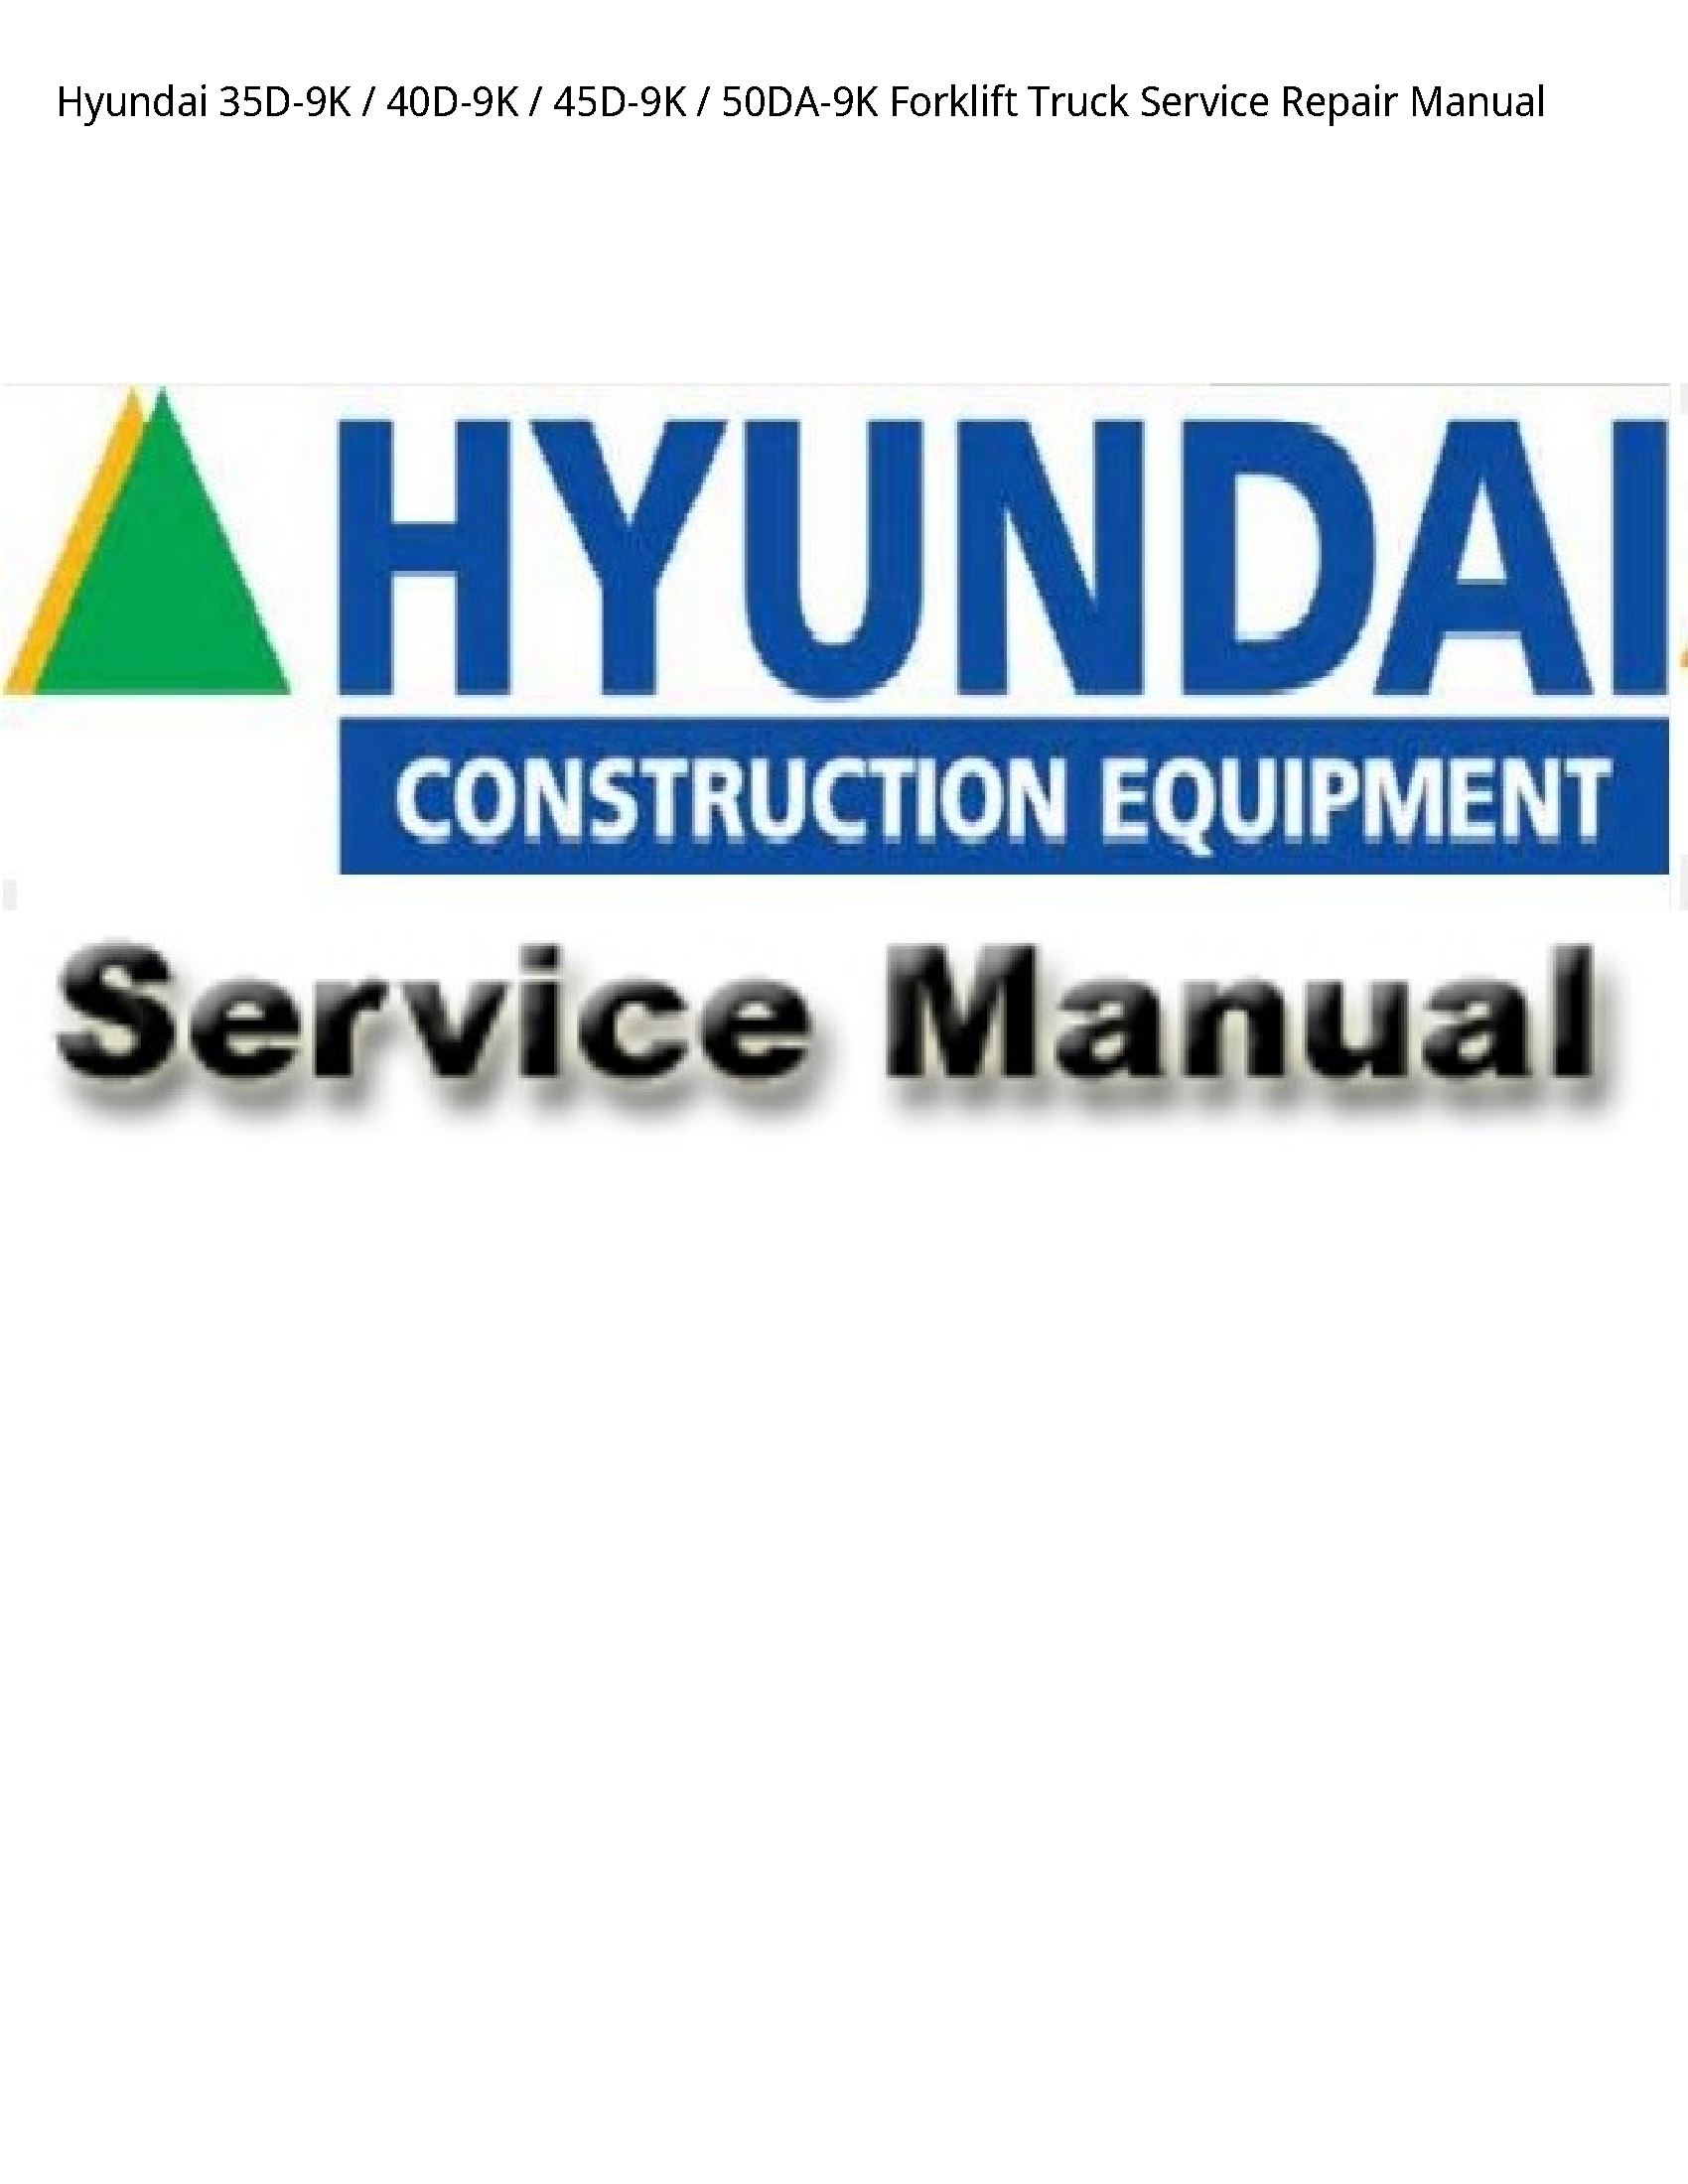 Hyundai 35D-9K Forklift Truck manual